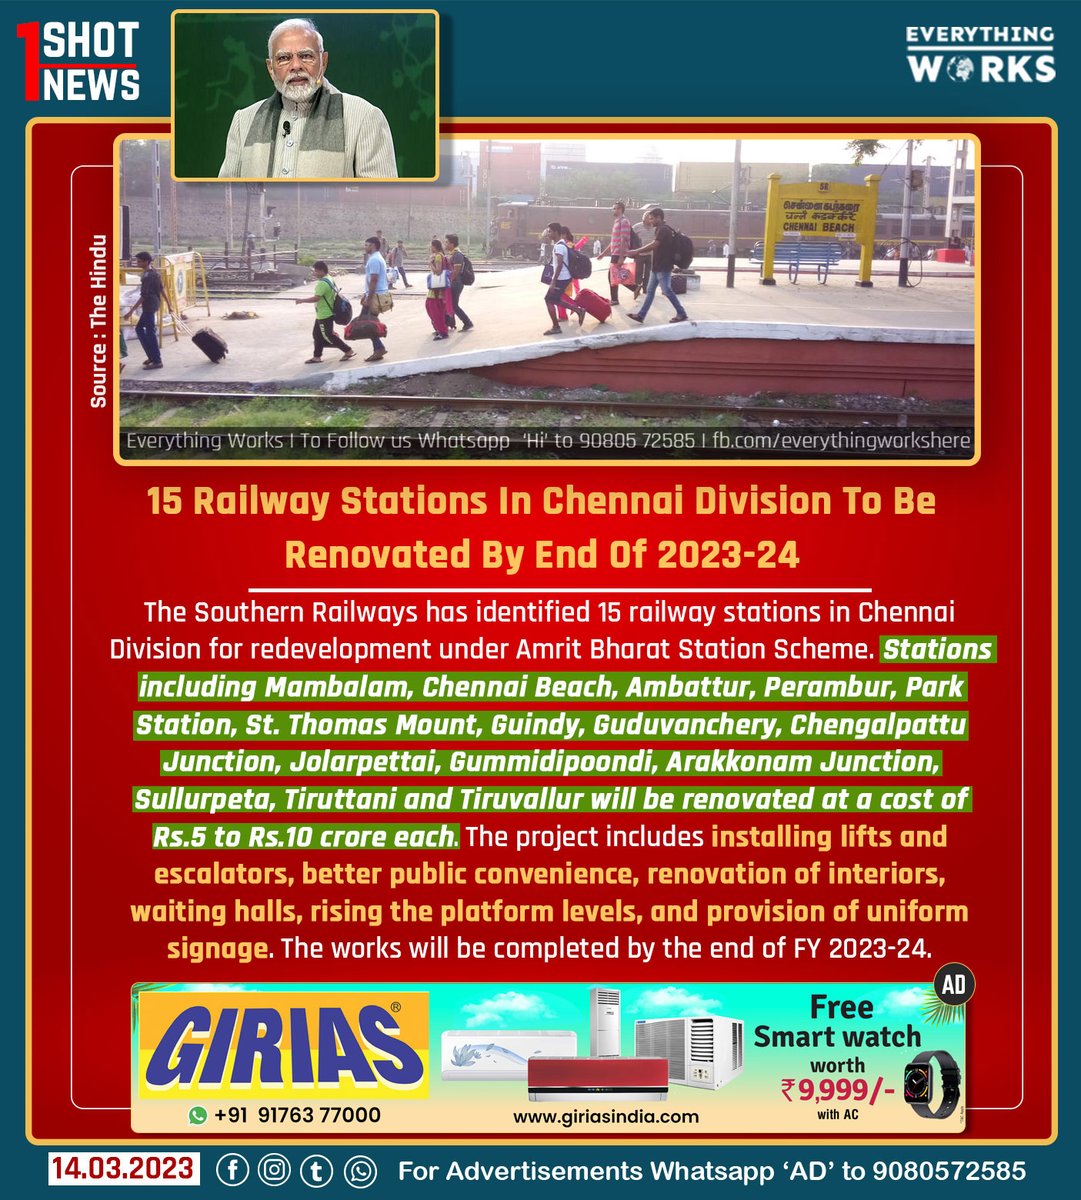 15 Railway Stations In Chennai Division To Be Renovated By End Of 2023-24.

#1ShotNews | #RailwayStation | #Chennai | #ChennaiBeach | #Sulurpet | #Jollarpettai | #Gummidipundi | #Tamilnadu | #TamilnaduNews